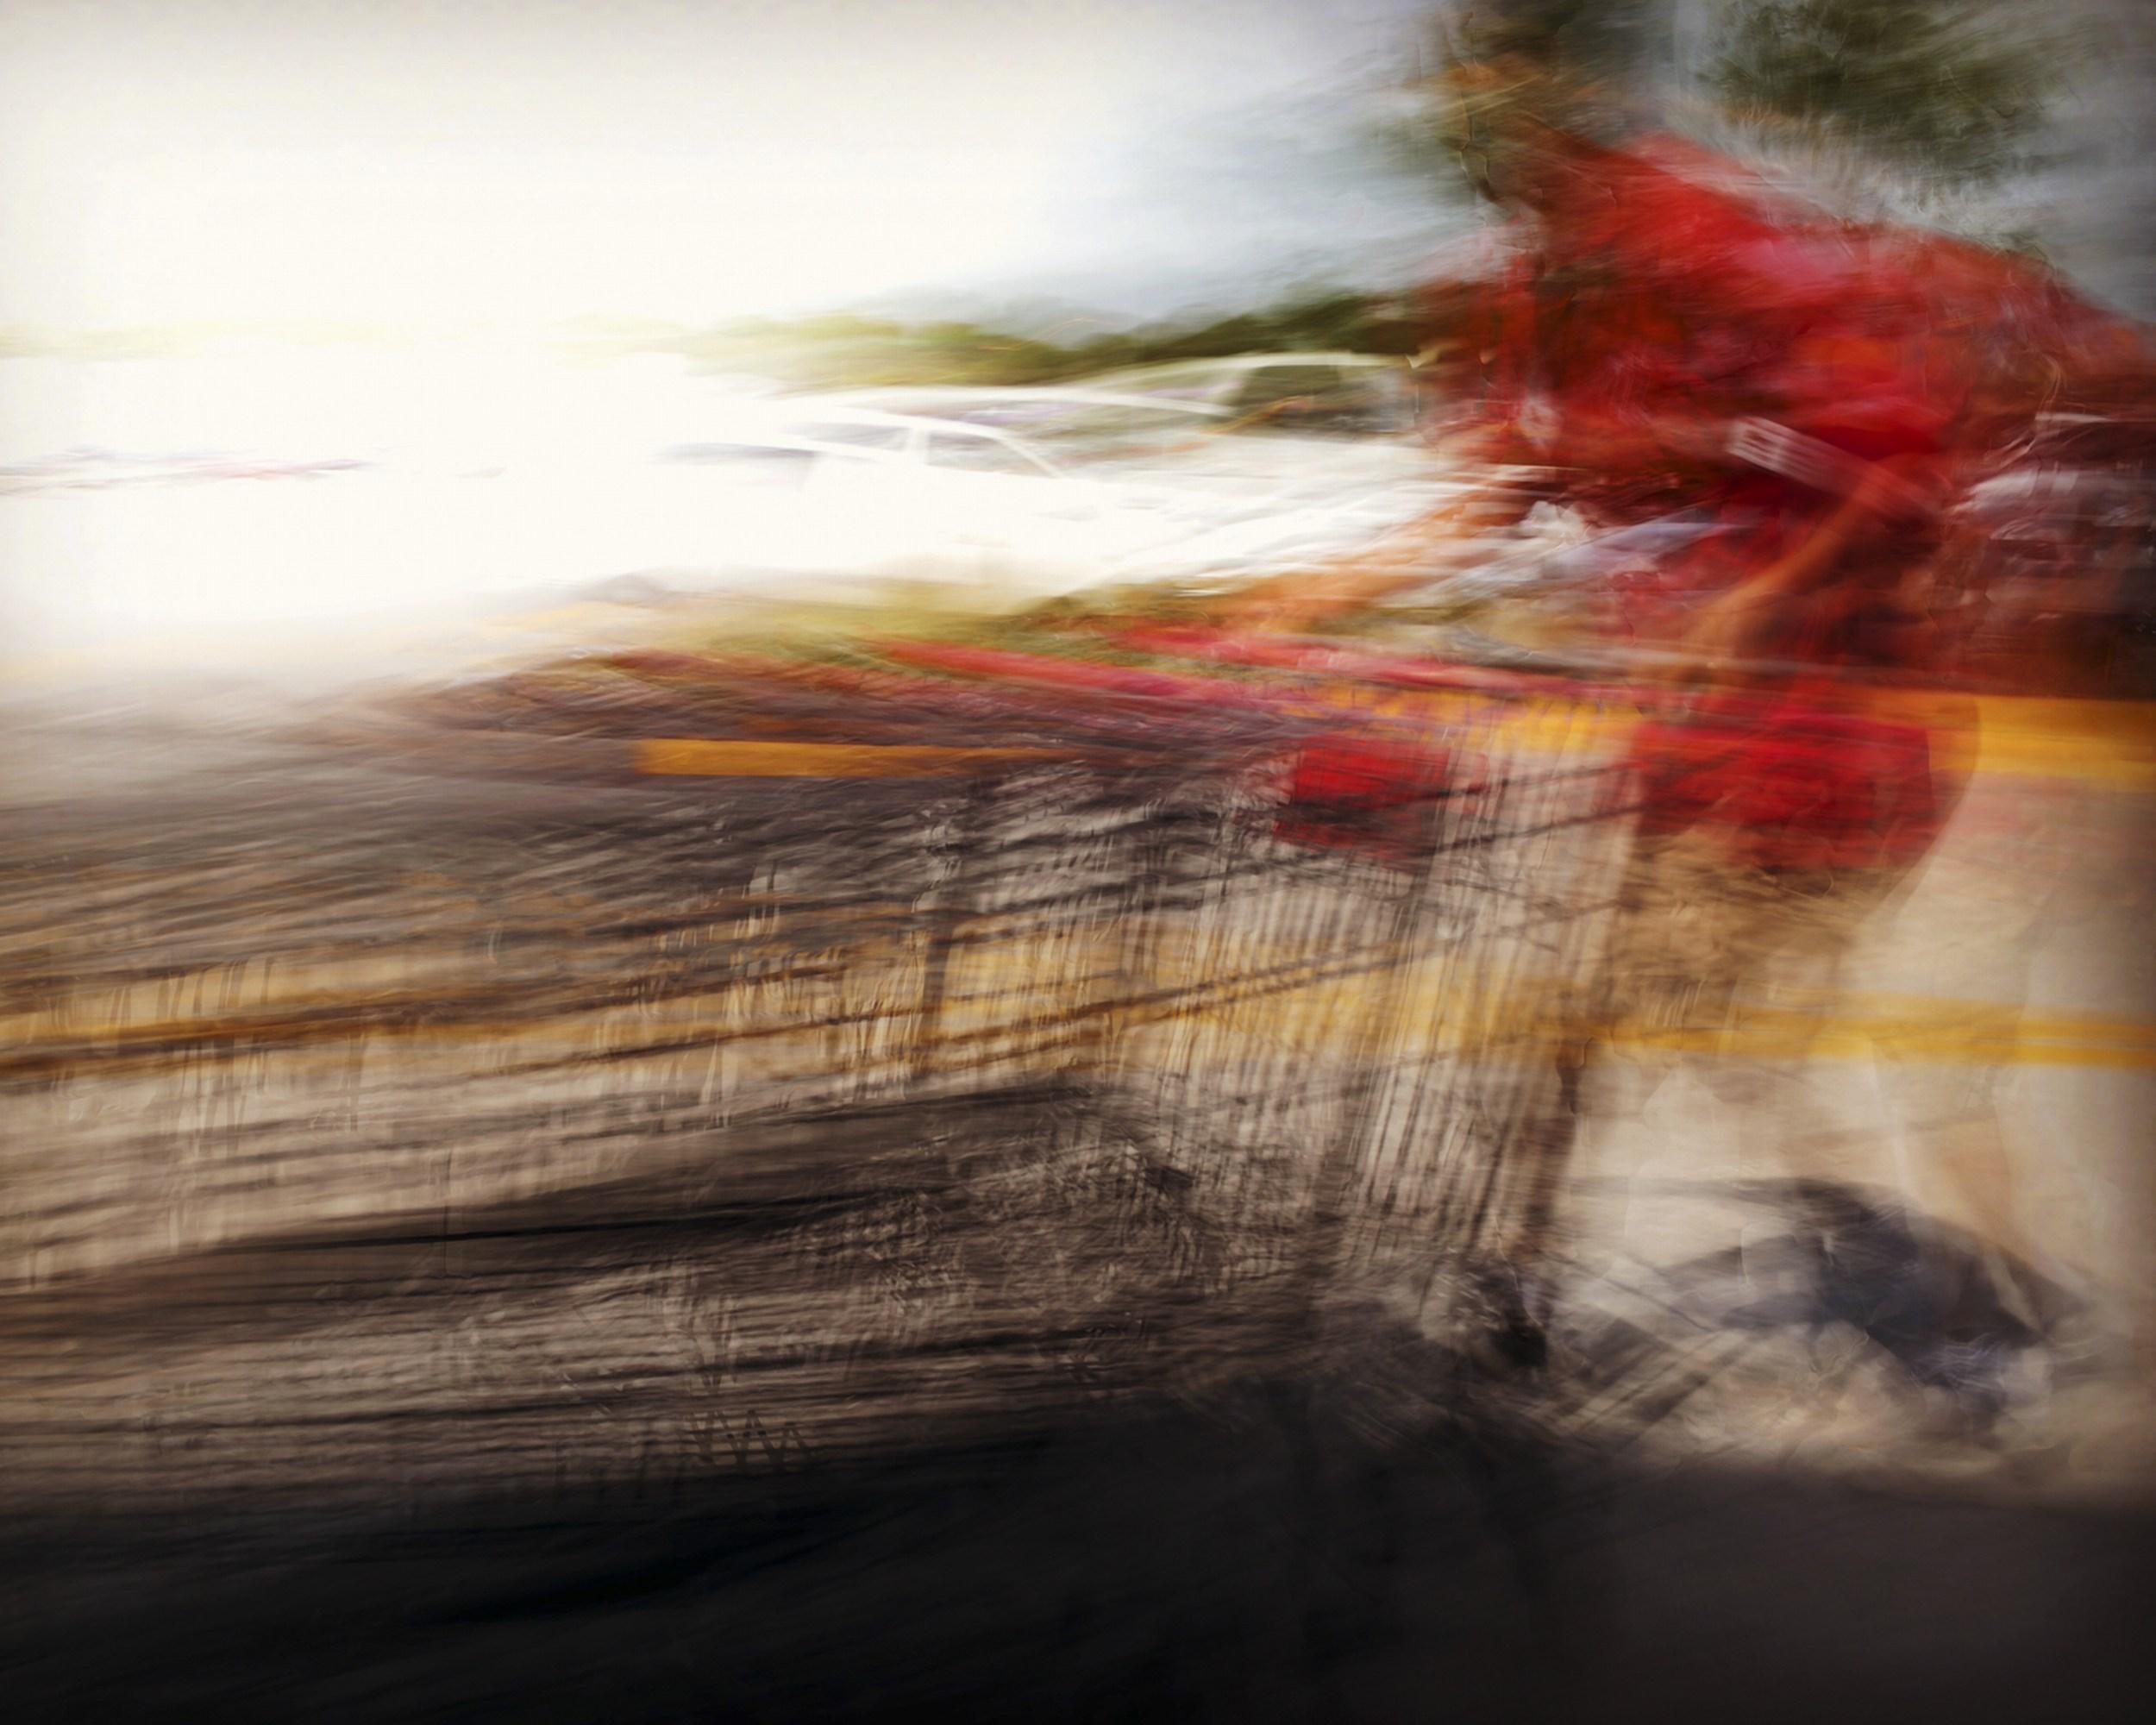 Jeffrey Tamblyn Figurative Photograph - Carts (motion blur, dream image, daily life, vivid colors)